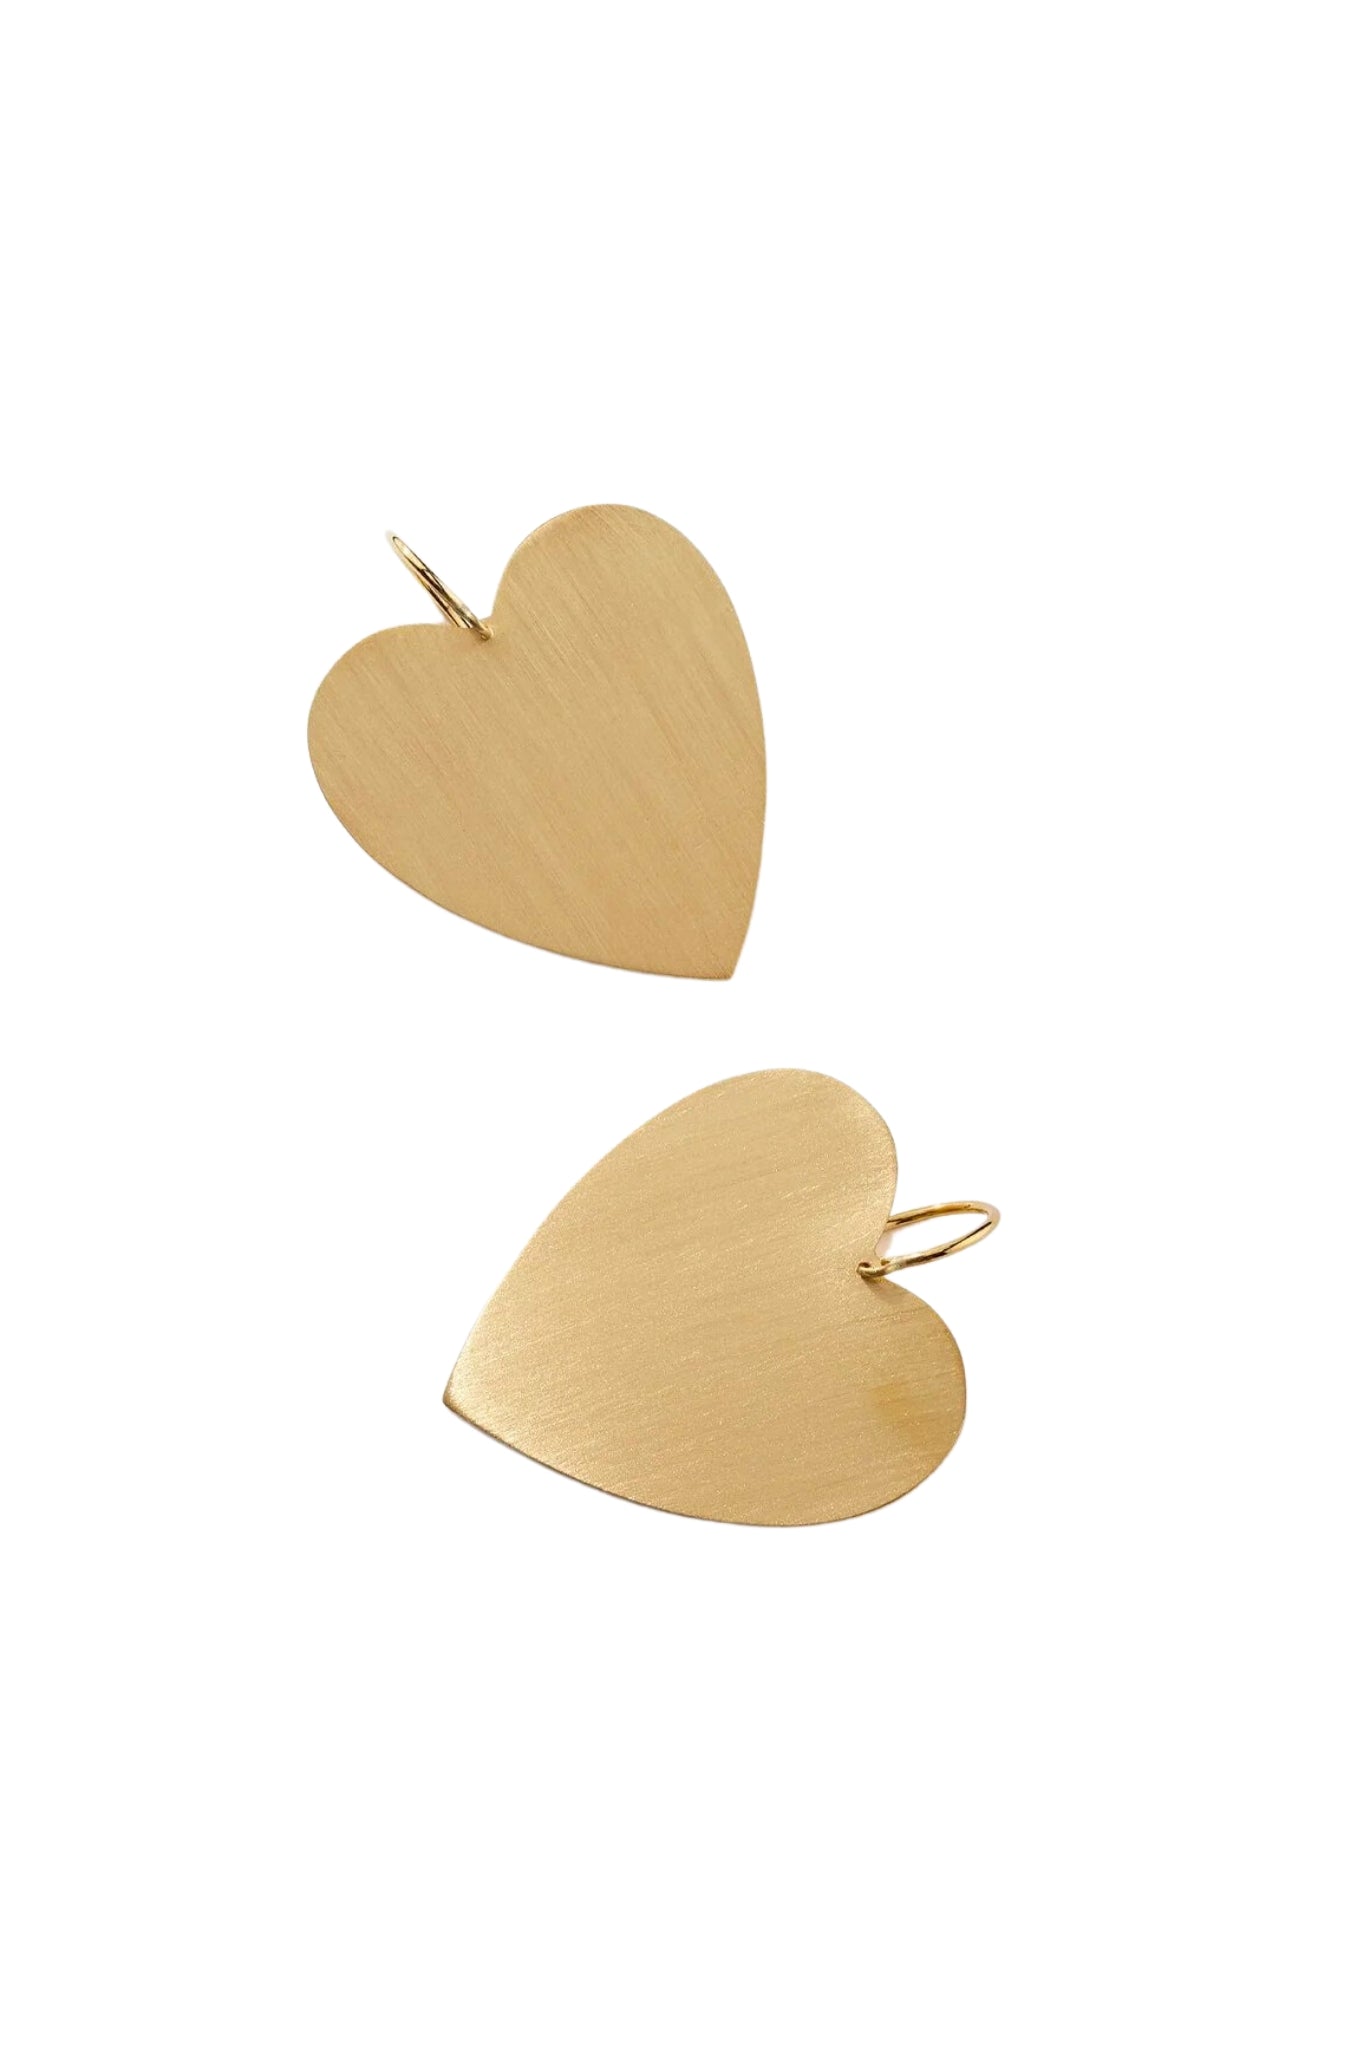 Irene Neuwirth Love Large Heart Earrings